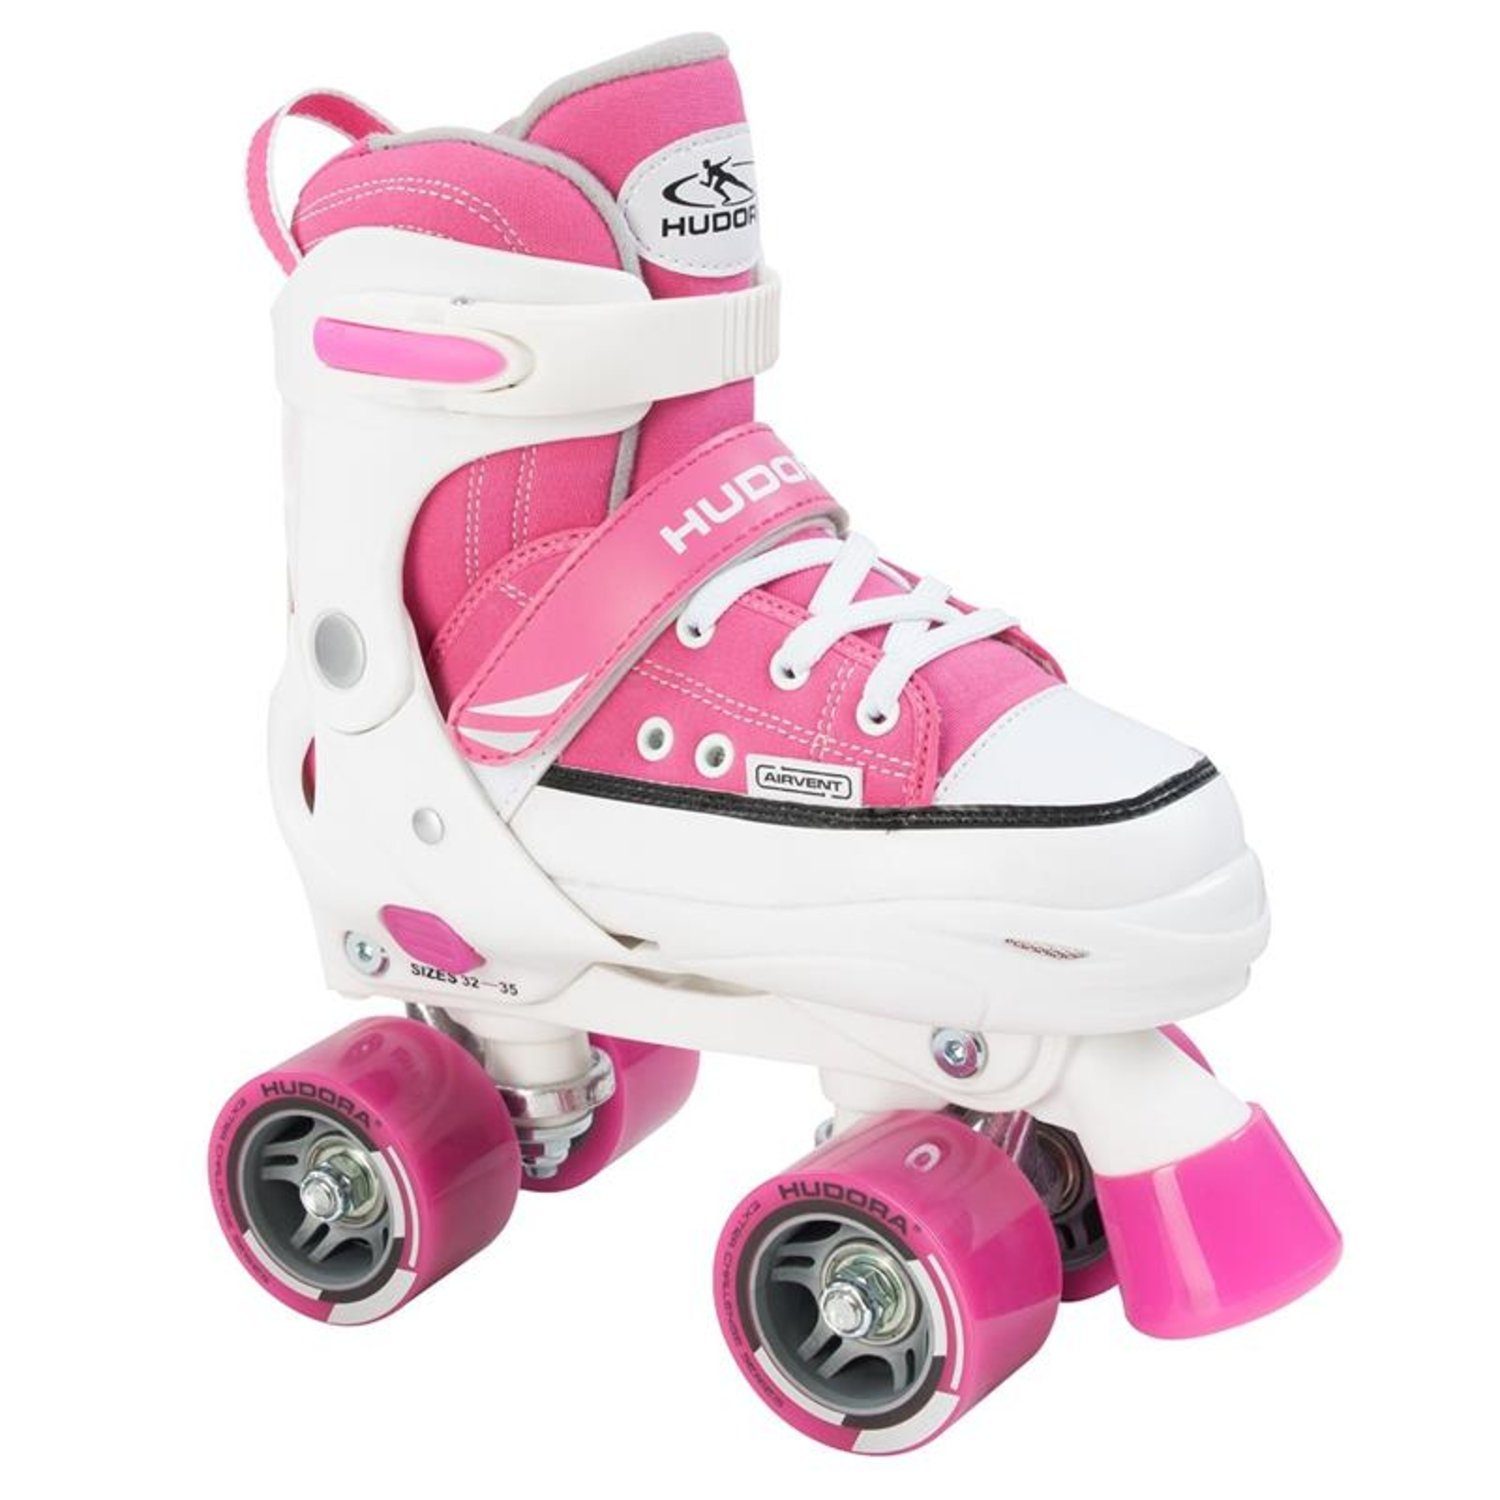 Hudora Inlineskates 22034 Roller Skate, pink, verstellbar Gr. 32-35